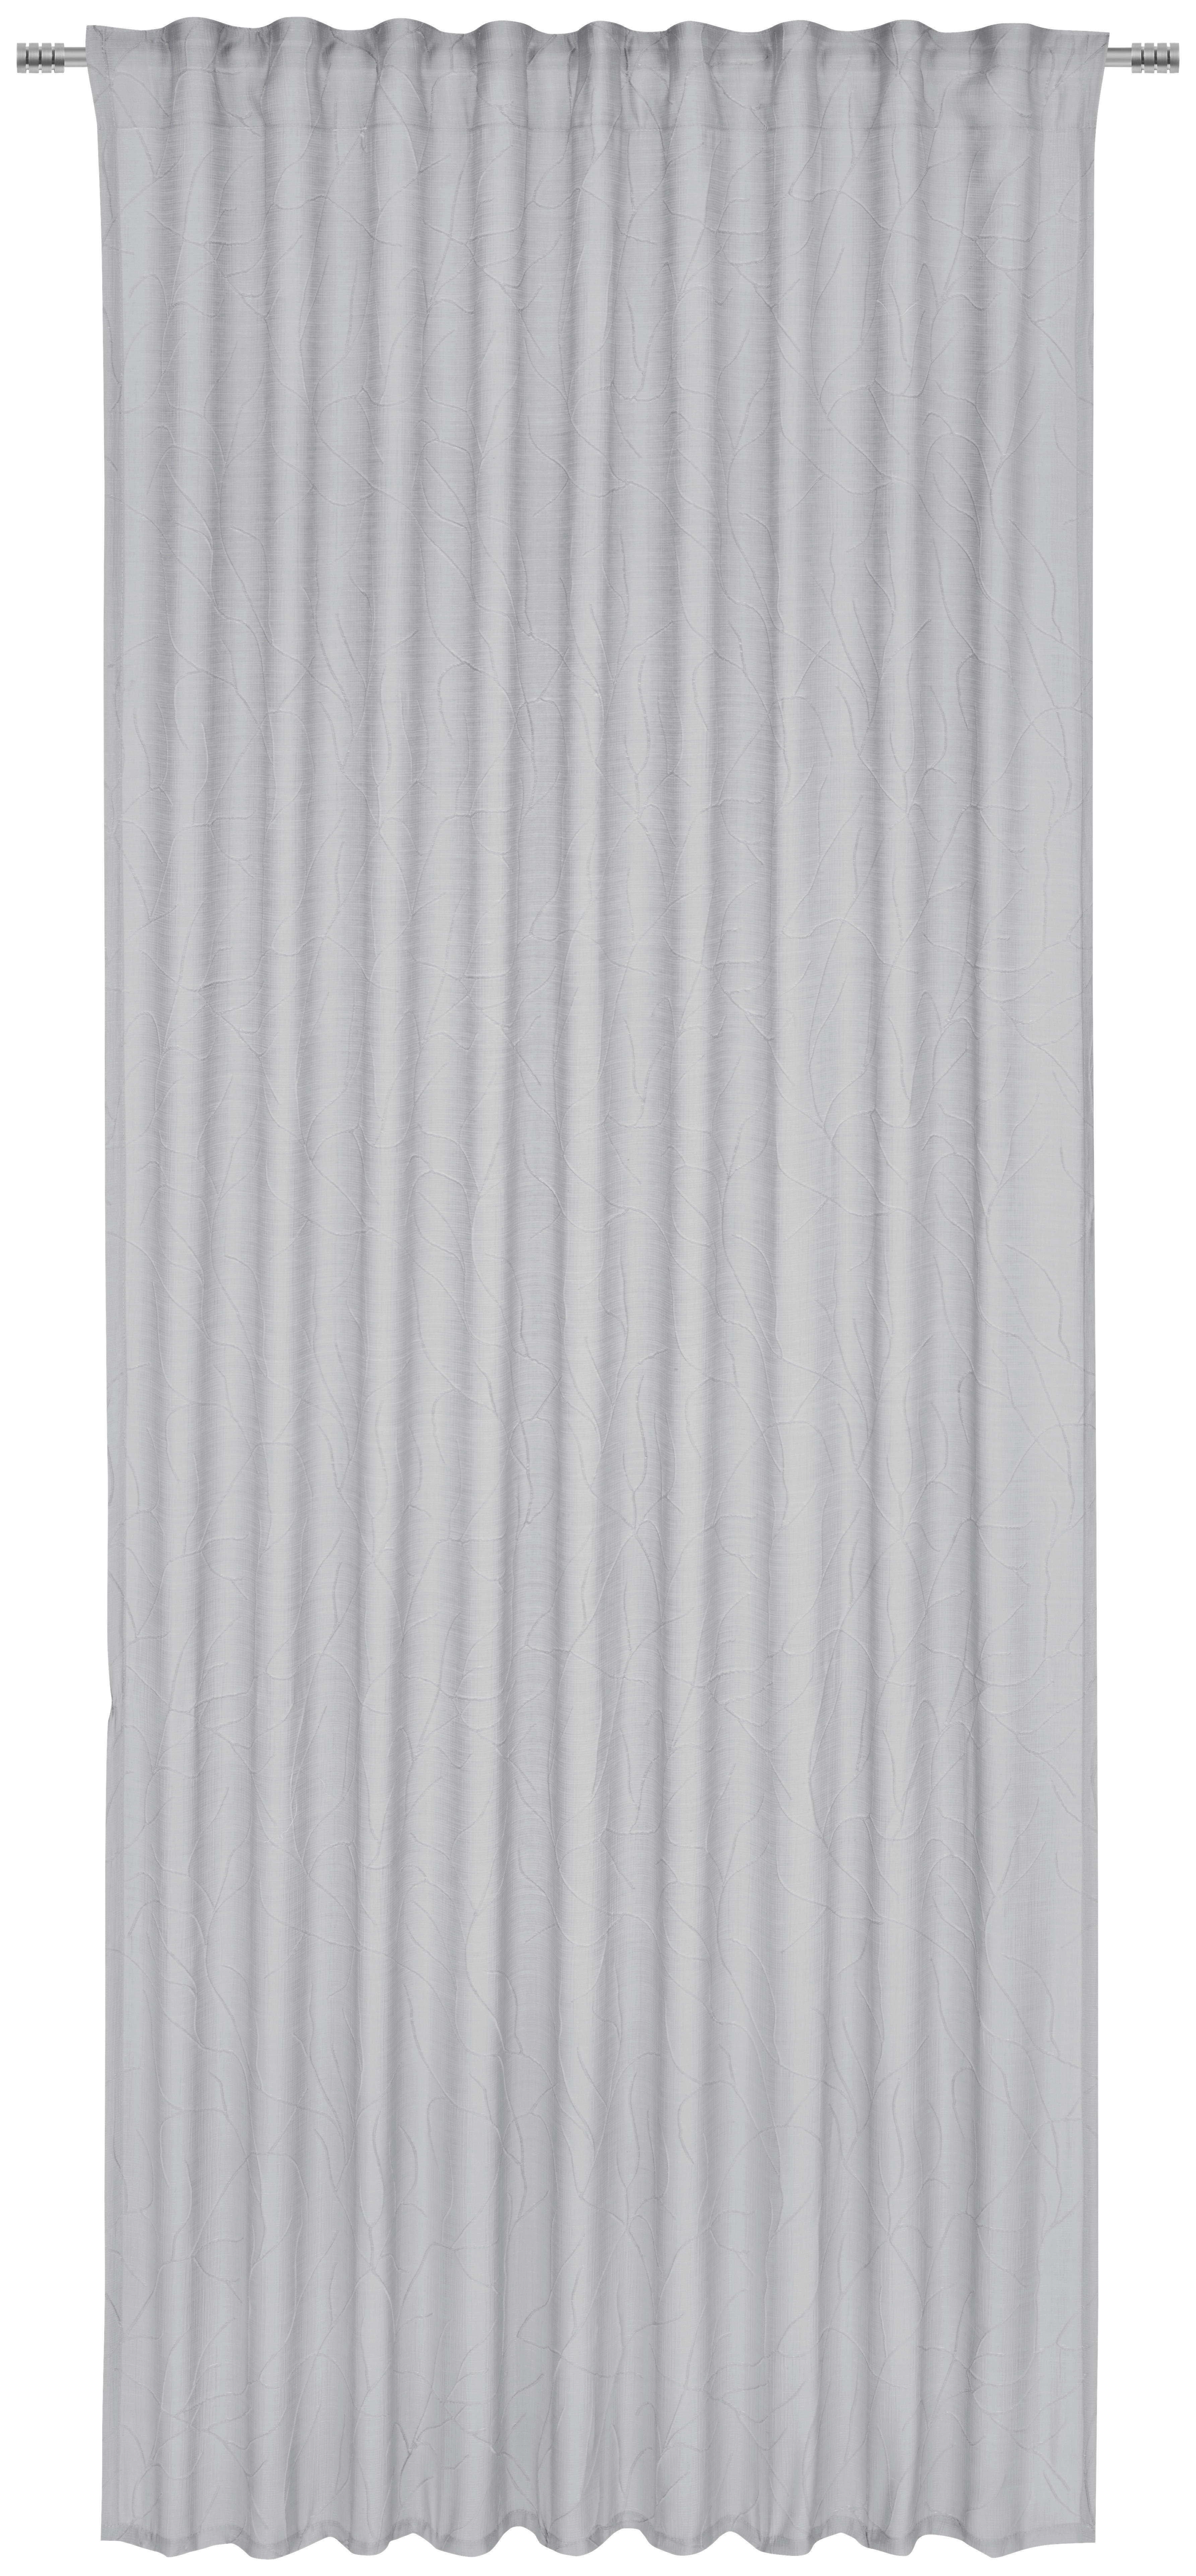 FERTIGVORHANG TAINATE halbtransparent 135/245 cm   - Design, Textil (135/245cm) - Esposa